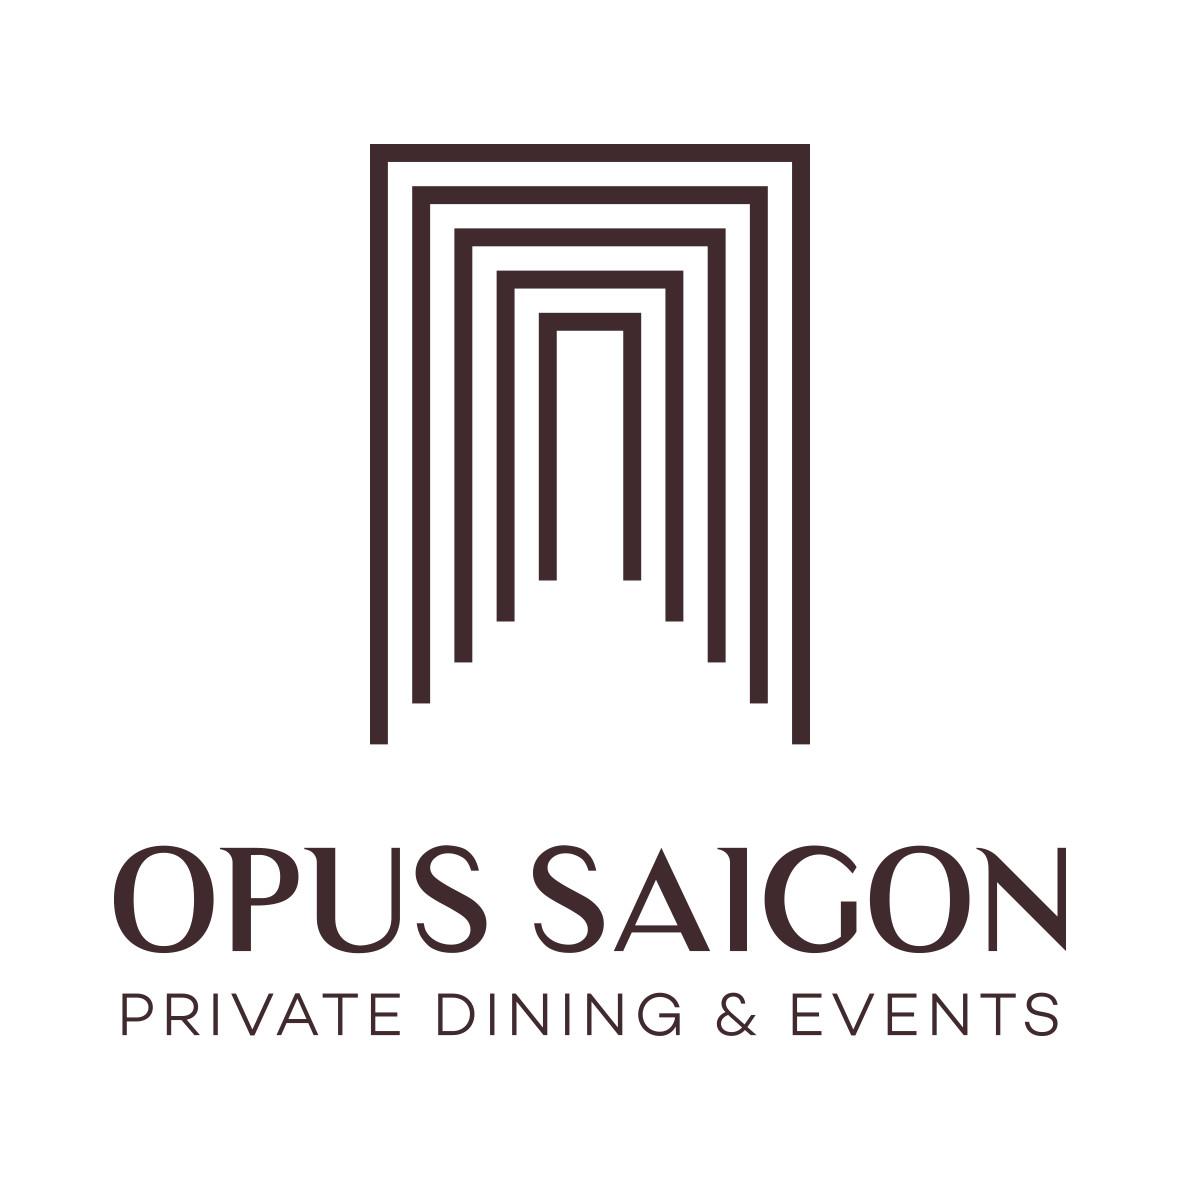 Oriental Saigon (Opus Saigon - Hoi An Sense - Mandarine Restaurants) 